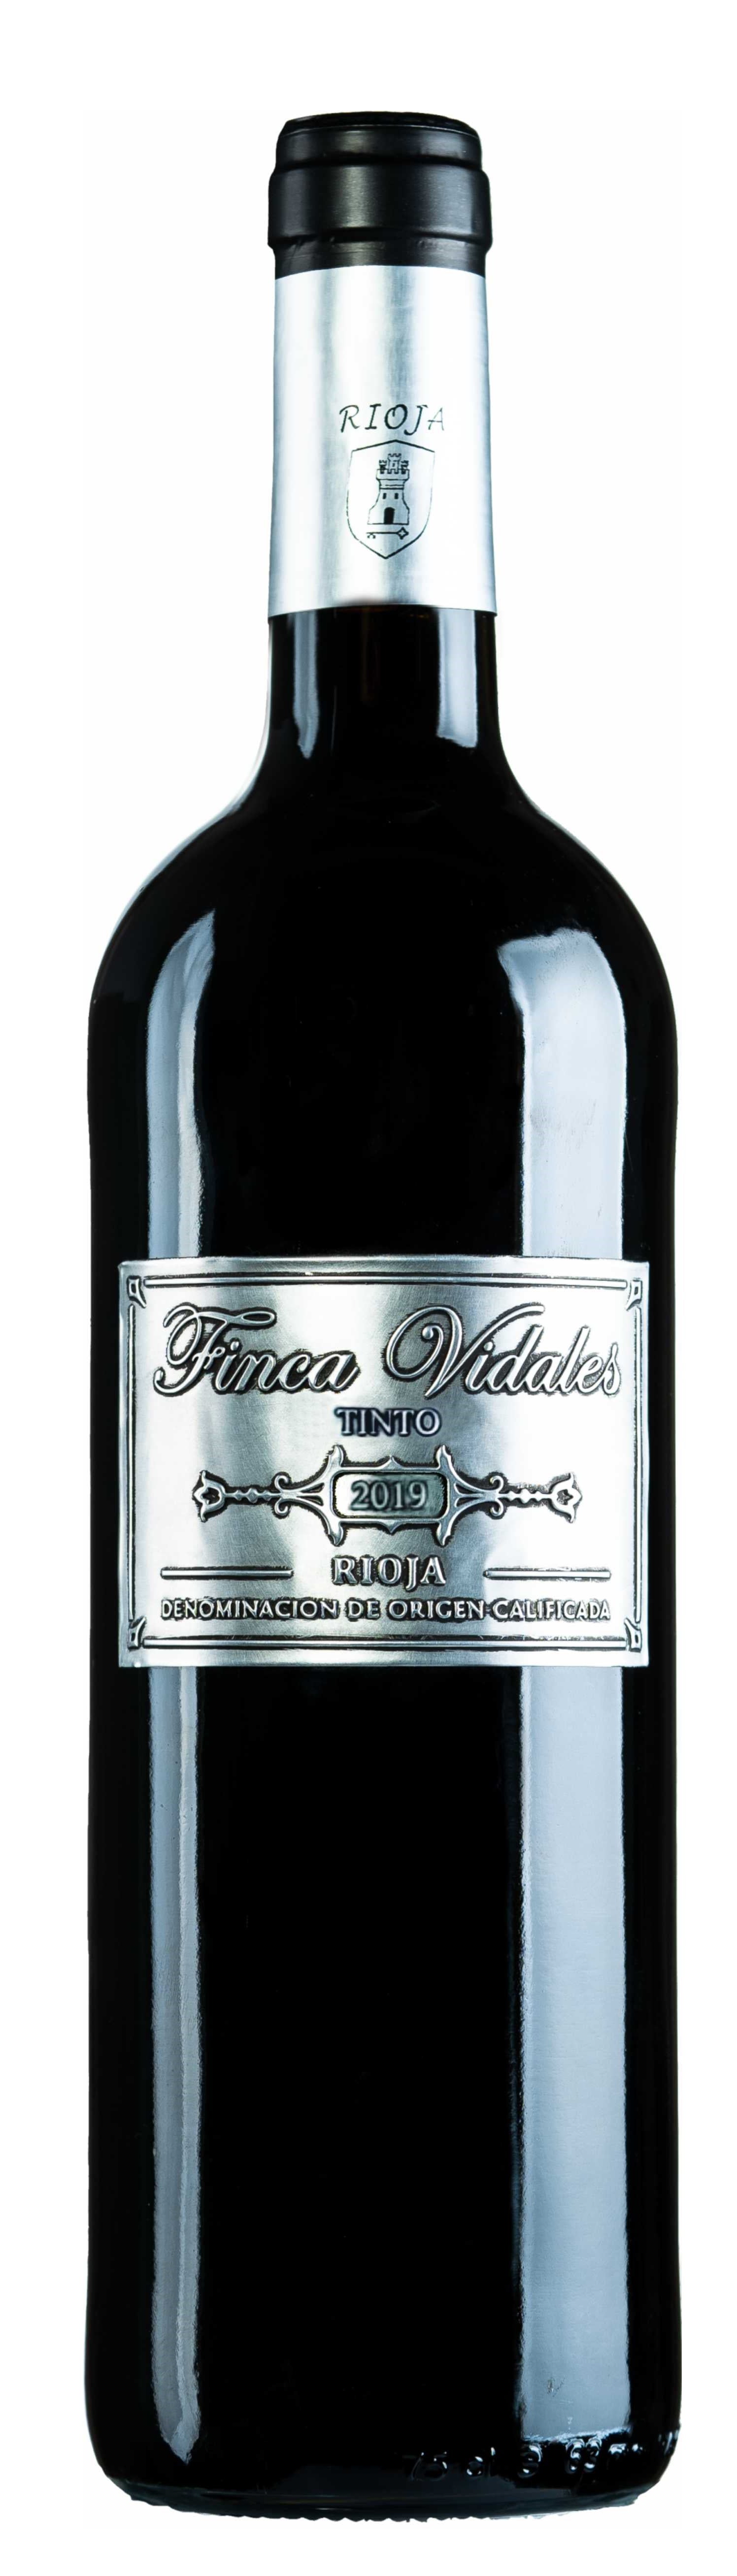 Wine Corp Rioja Bk Depot Tinto Vidales Finca –